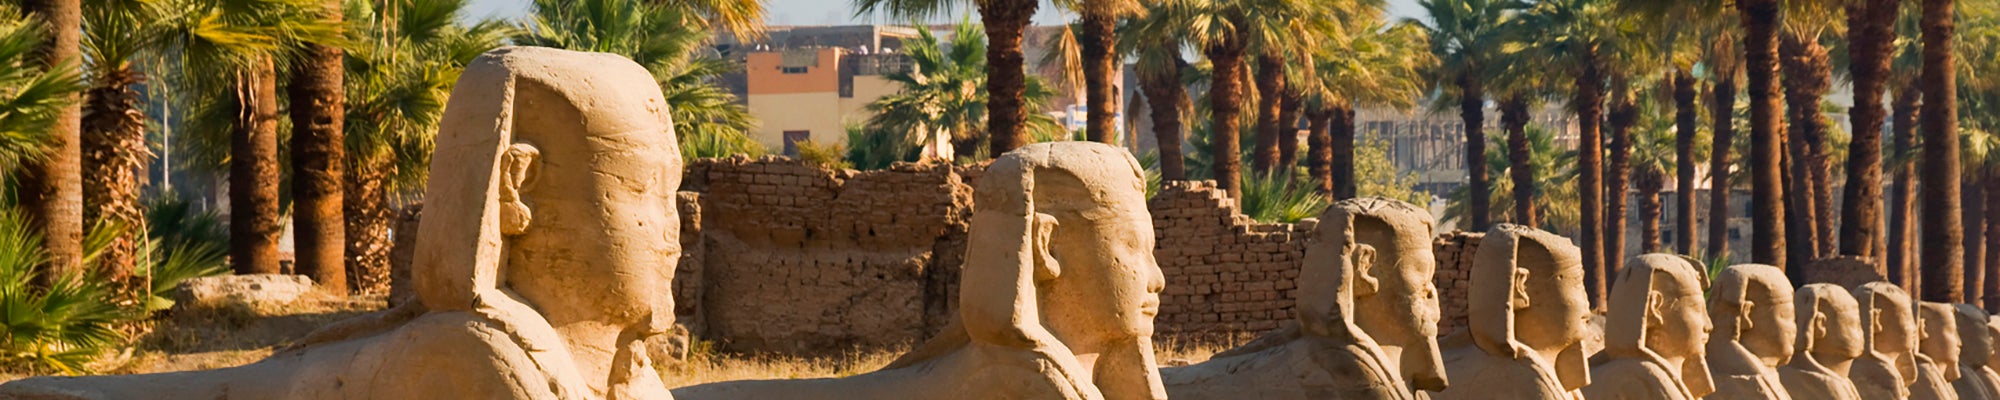 Sphinx statues